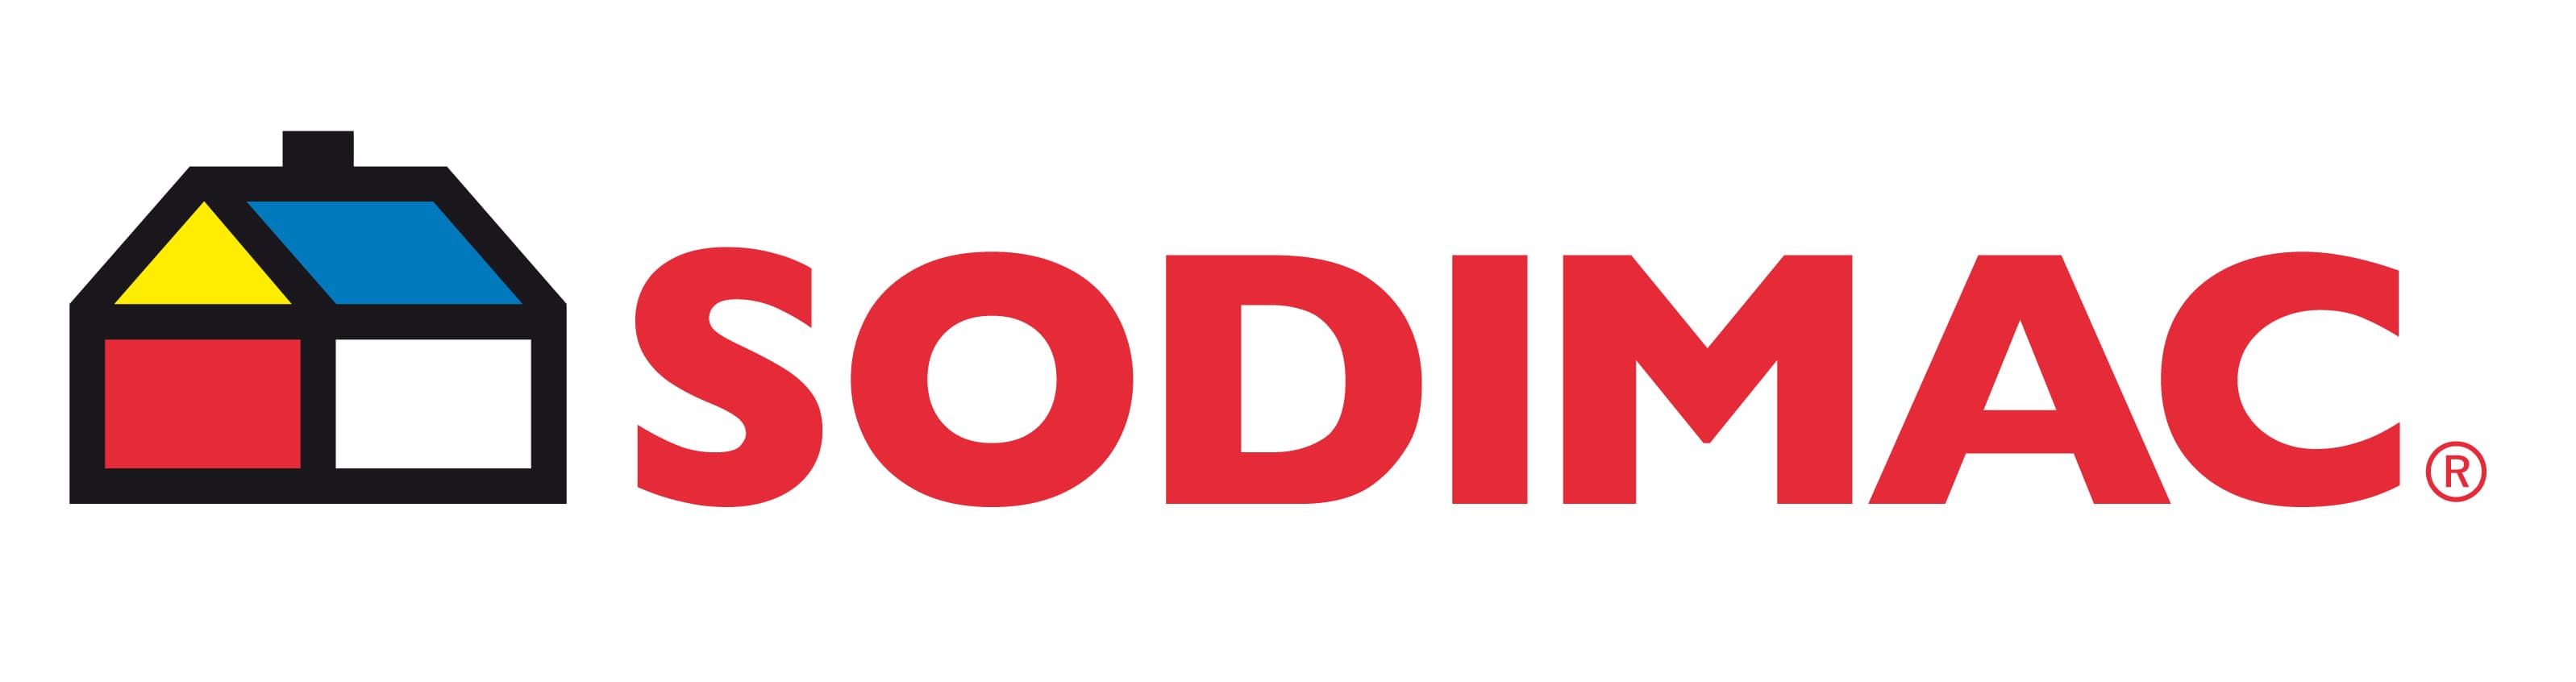 Boplan client: Sodimac logo